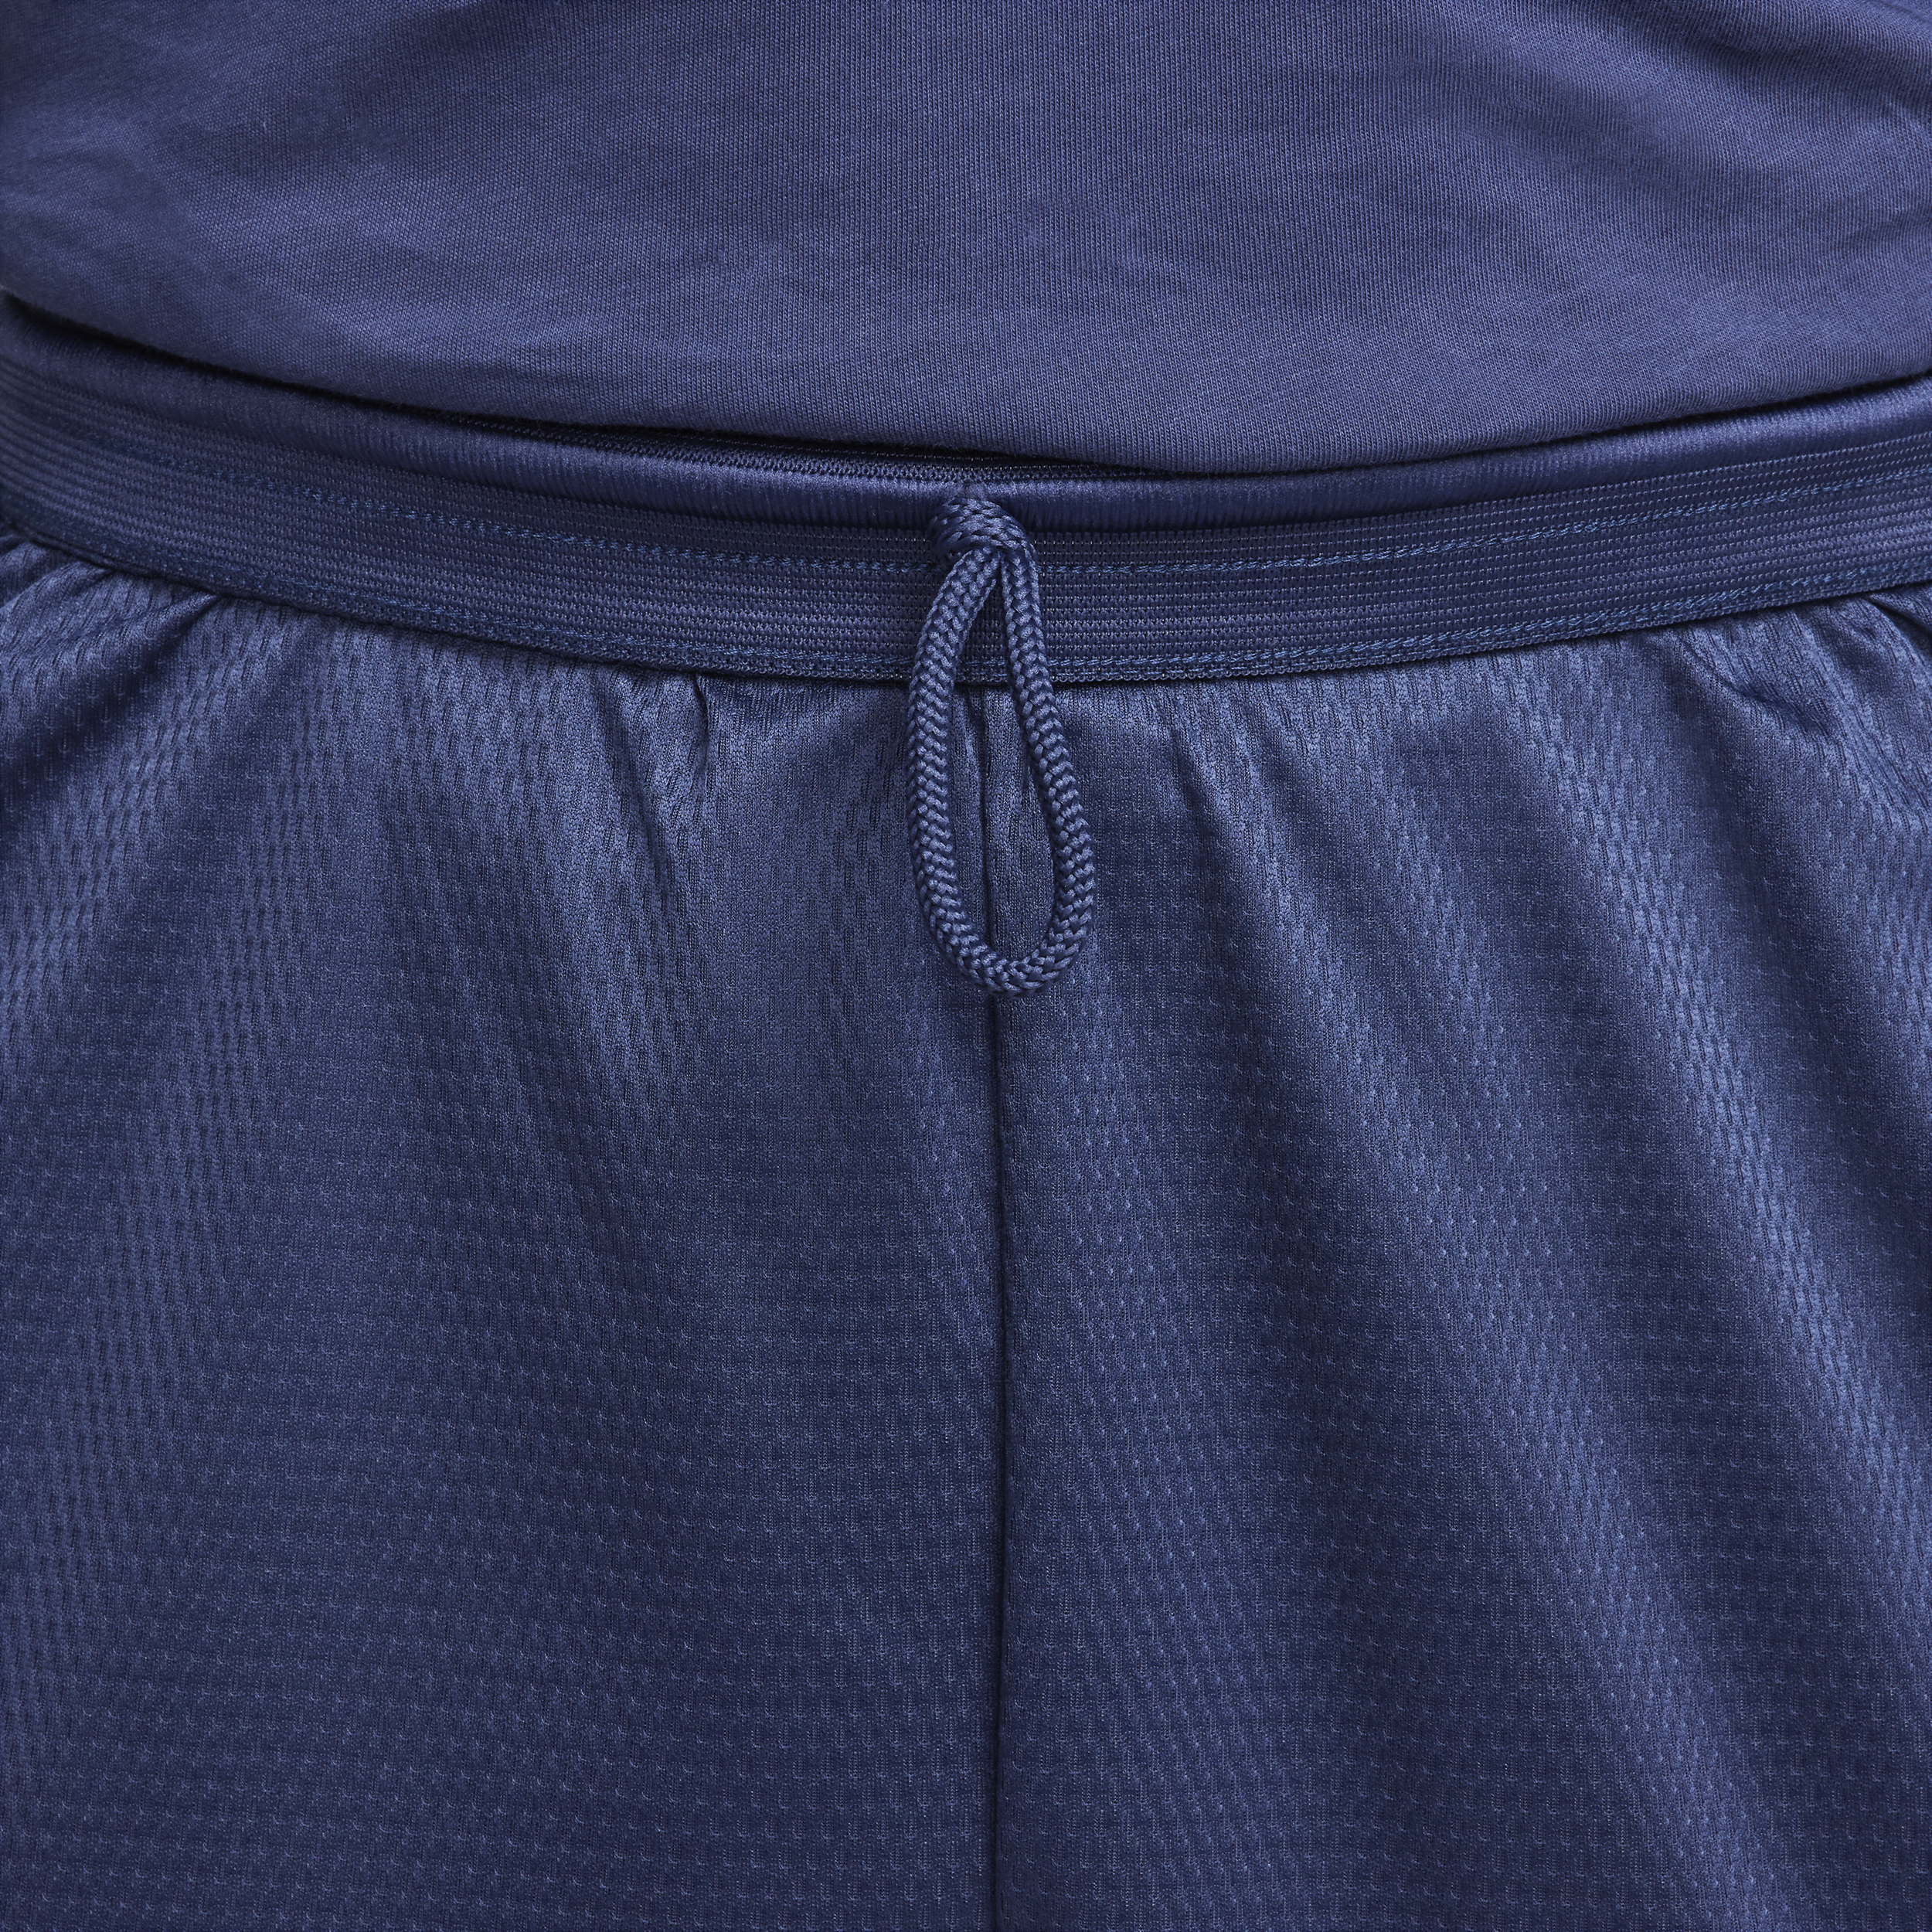 Nike Icon Dri-FIT basketbalshorts voor heren (28 cm) Blauw